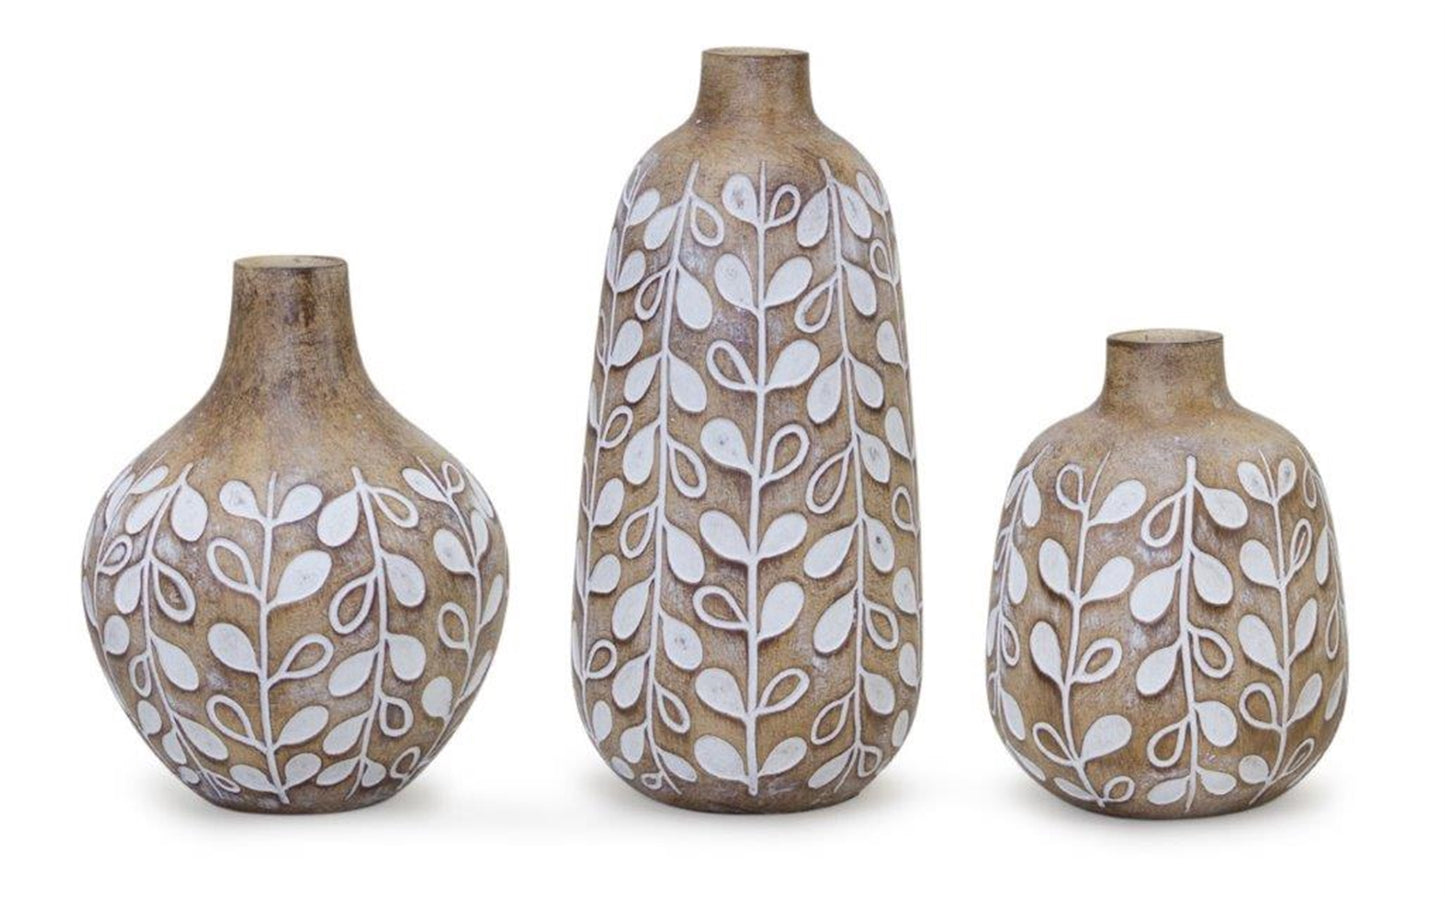 Vase (Set of 3) 5.25"H, 6"H, 8.75"H Resin